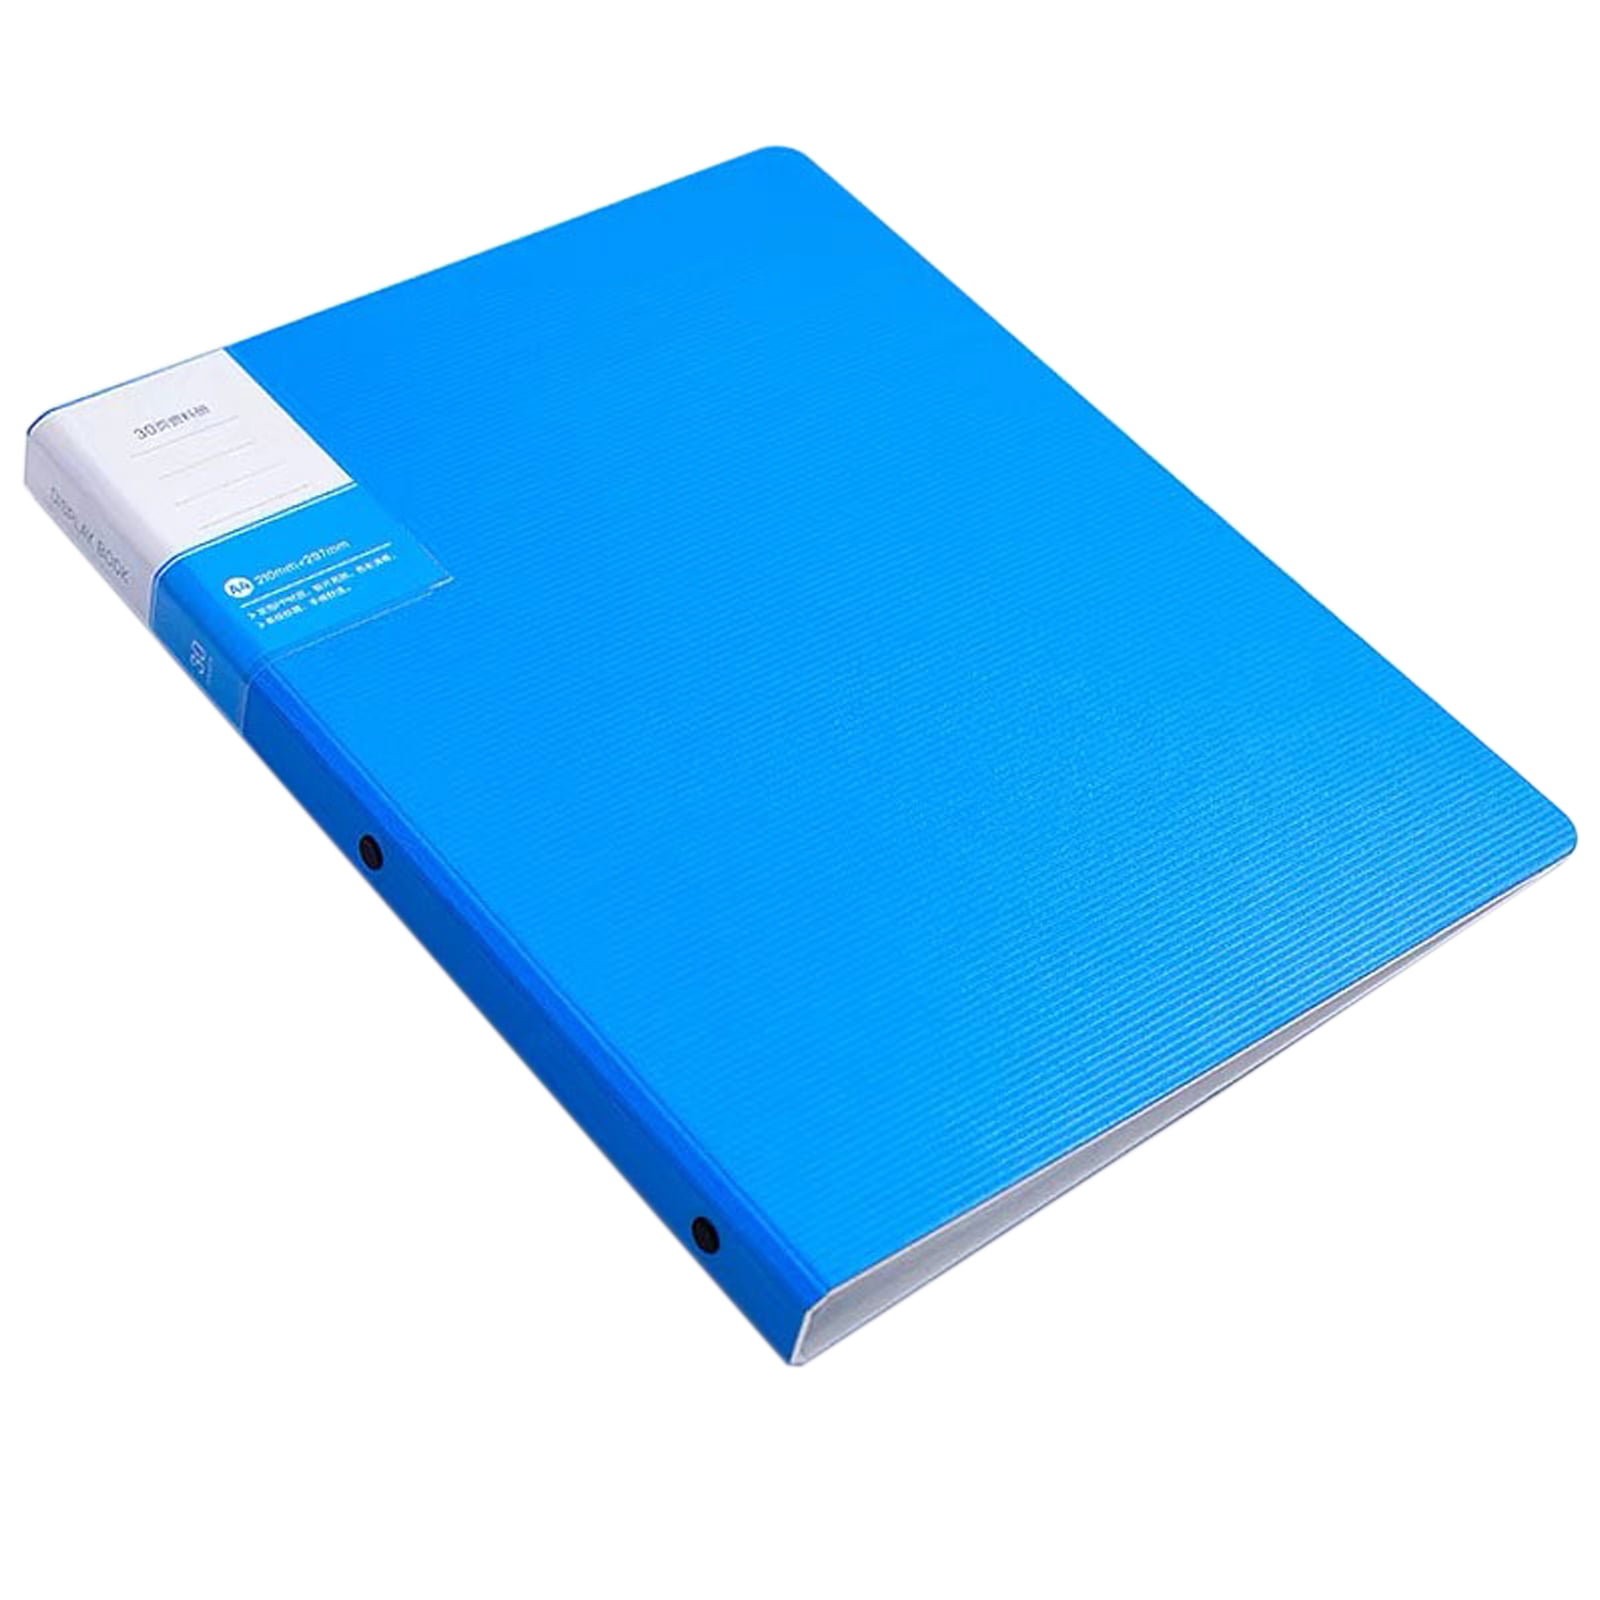 AIKEJANI Binder with Plastic Sleeves (Blue), 30Pocket